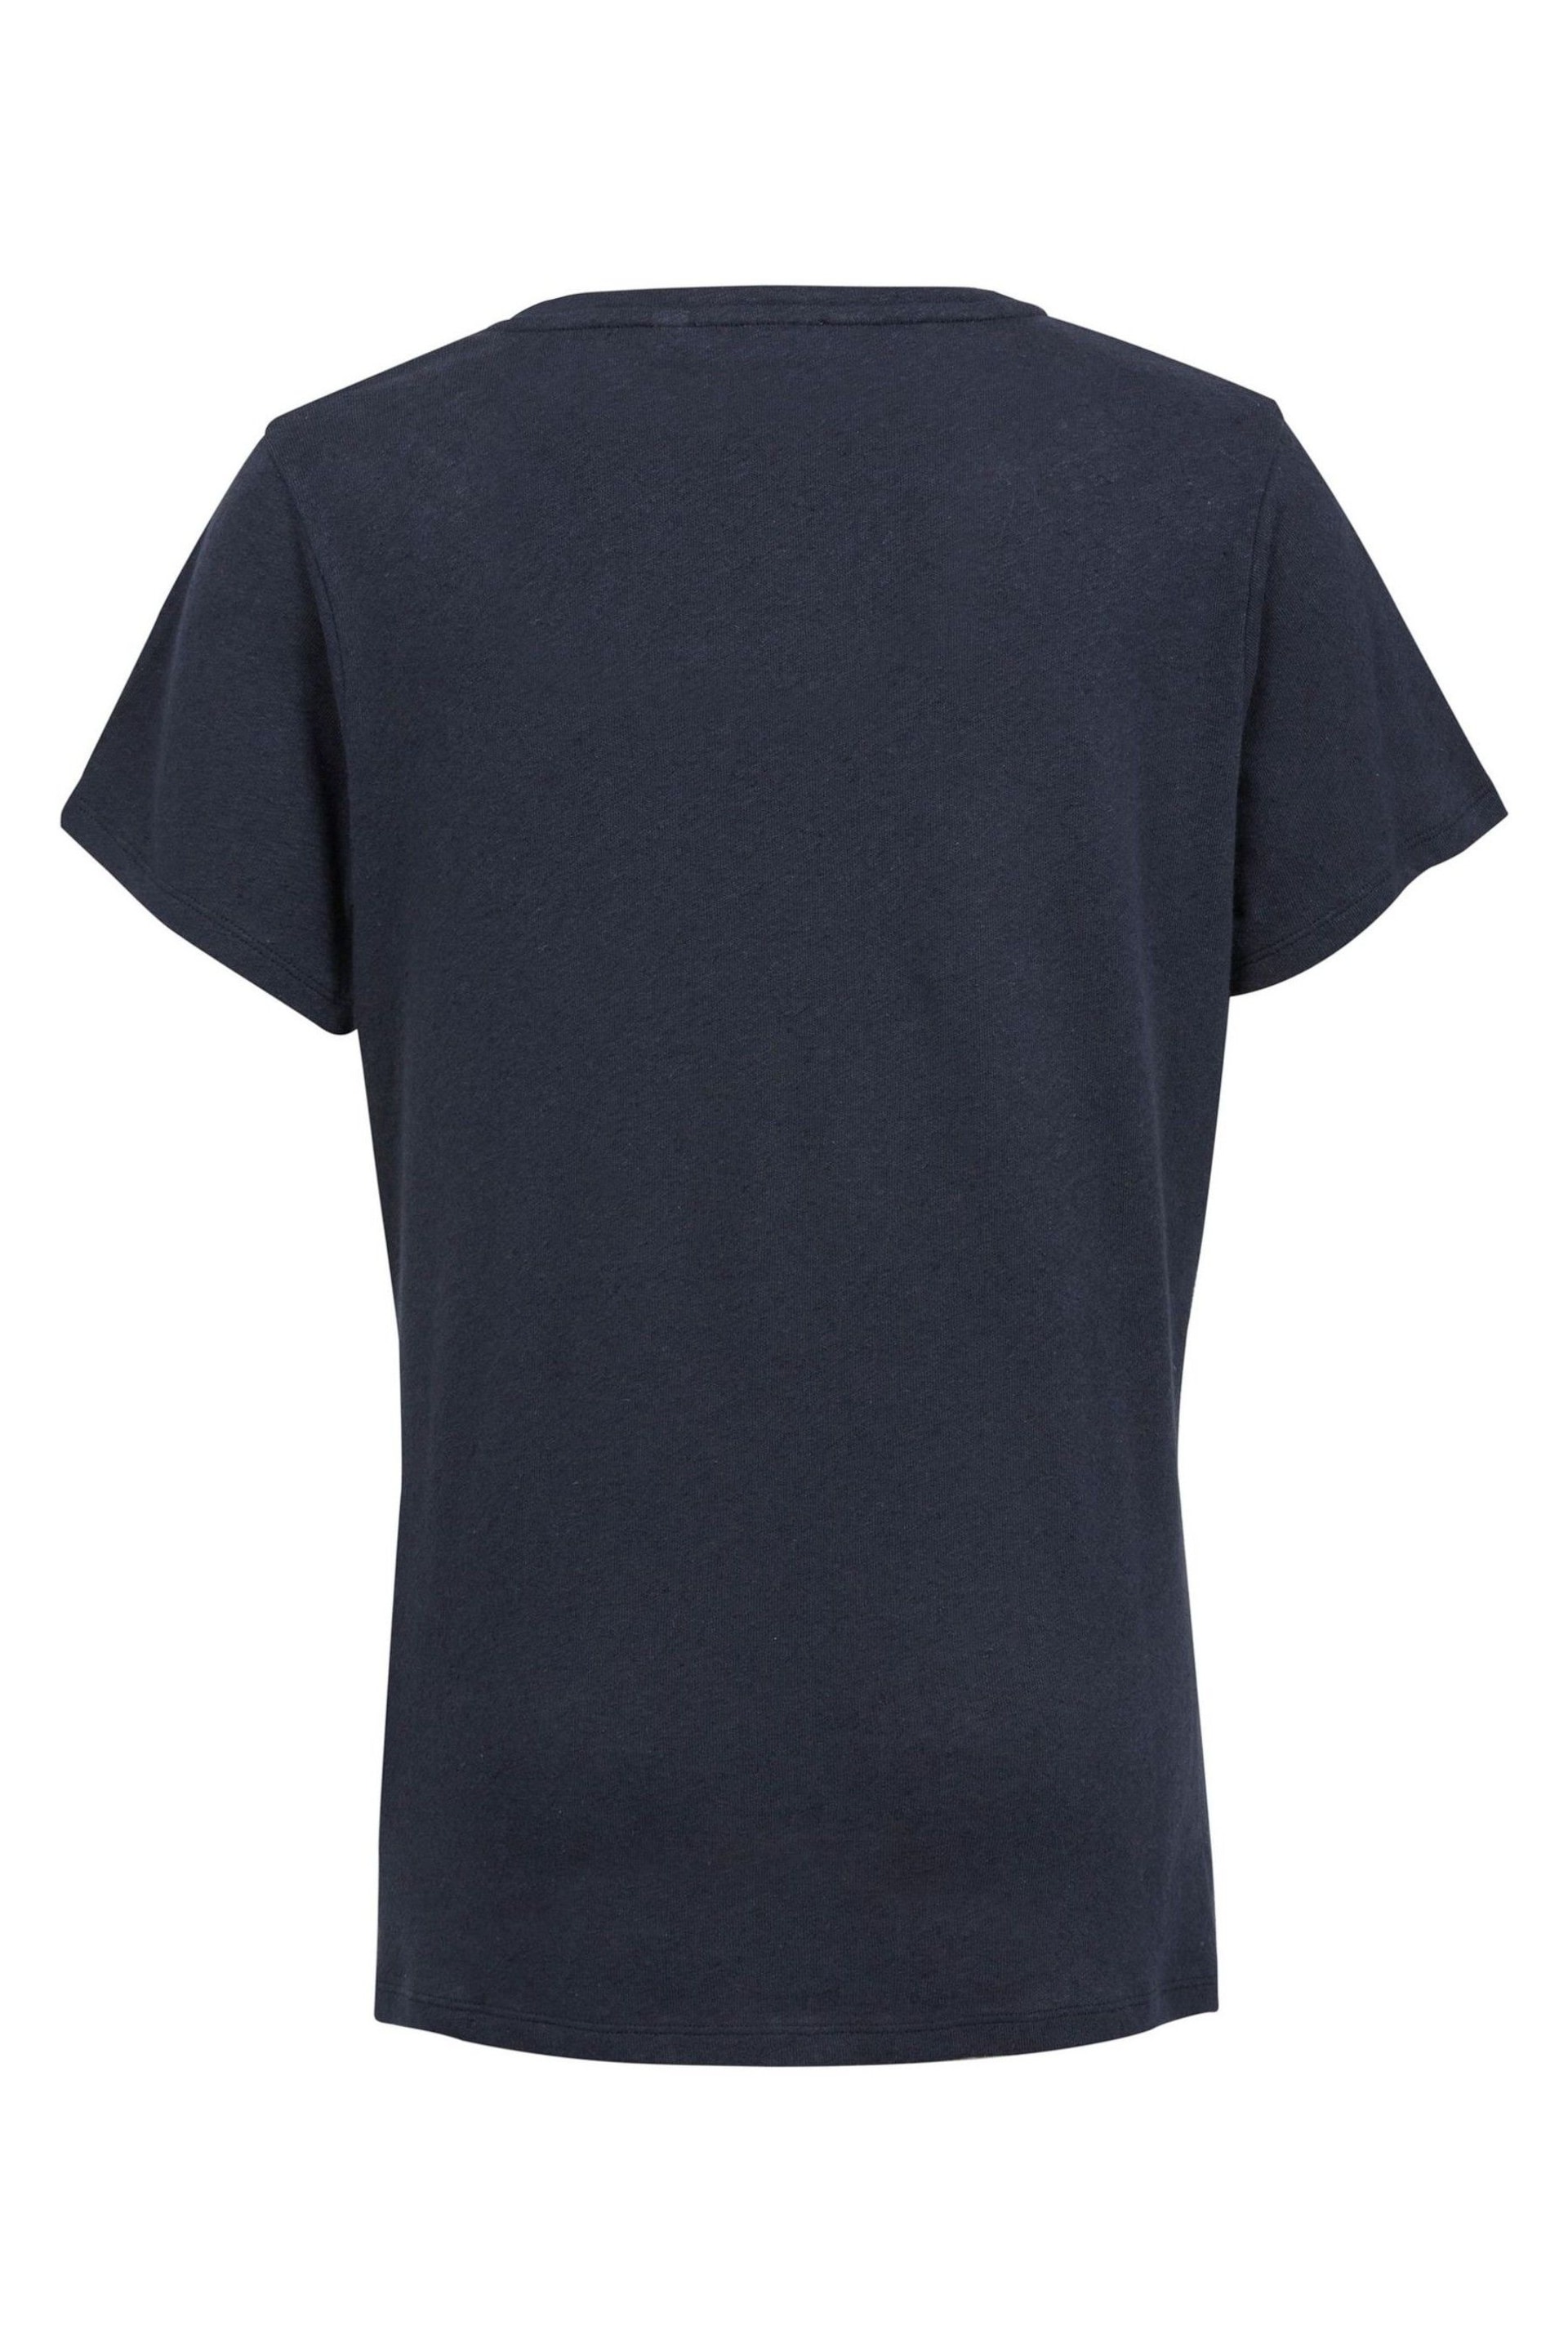 Celtic & Co. Grey Linen / Cotton V-Neck T Shirt - Image 3 of 5